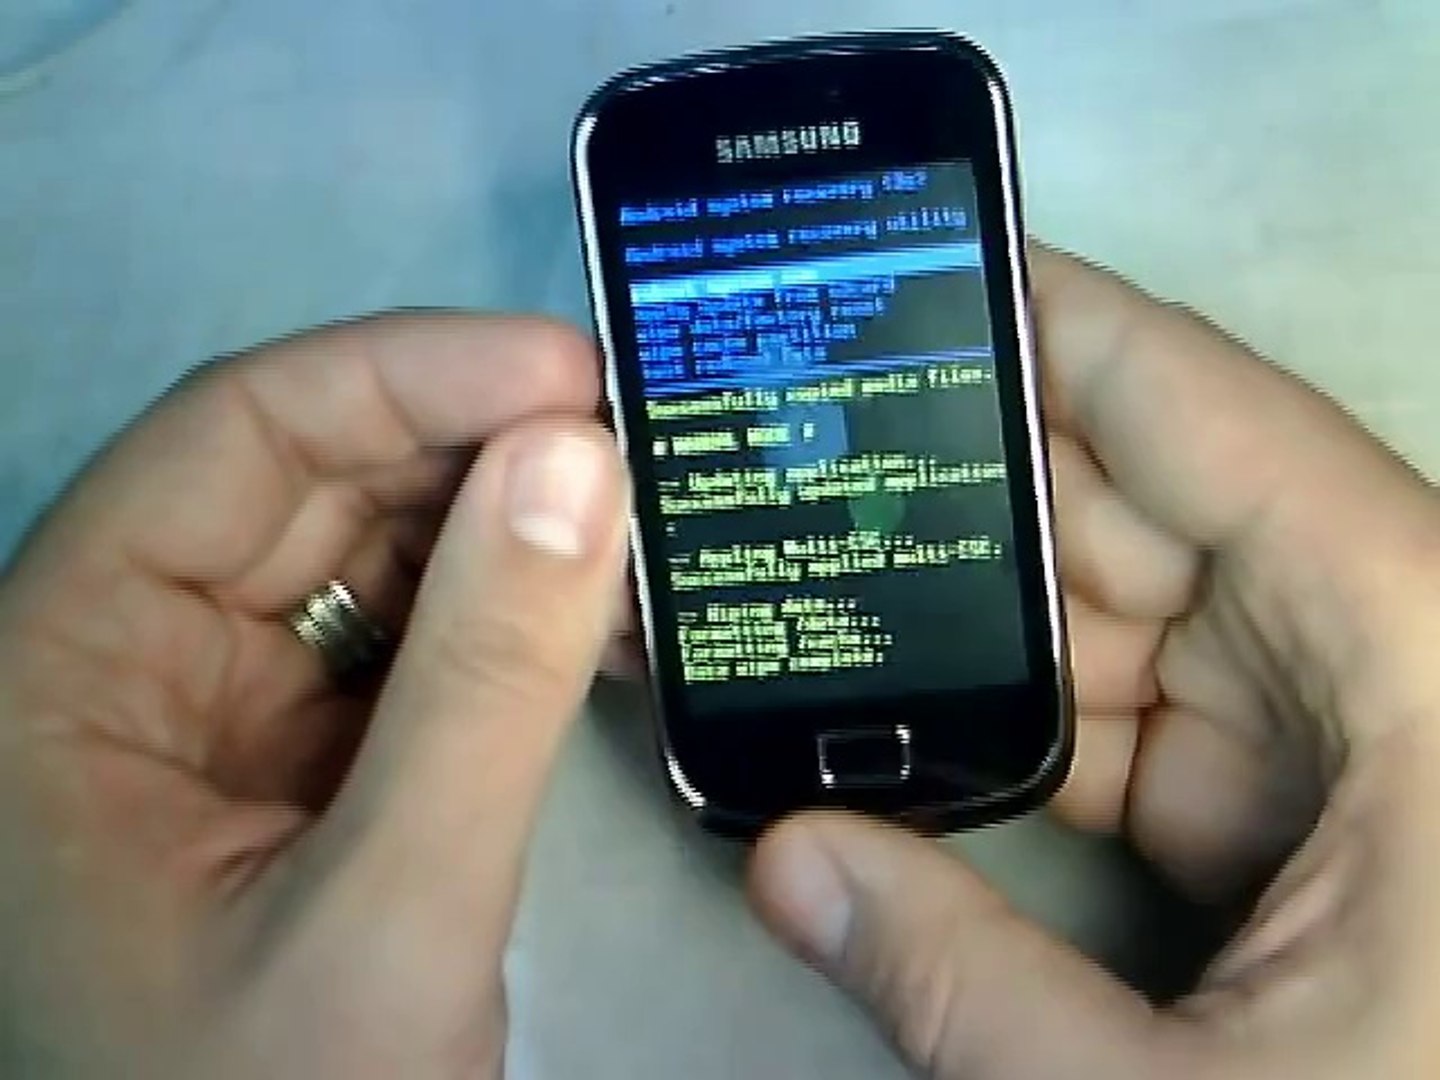 Samsung Galaxy Mini 2 S6500D hard reset - Dailymotion Video